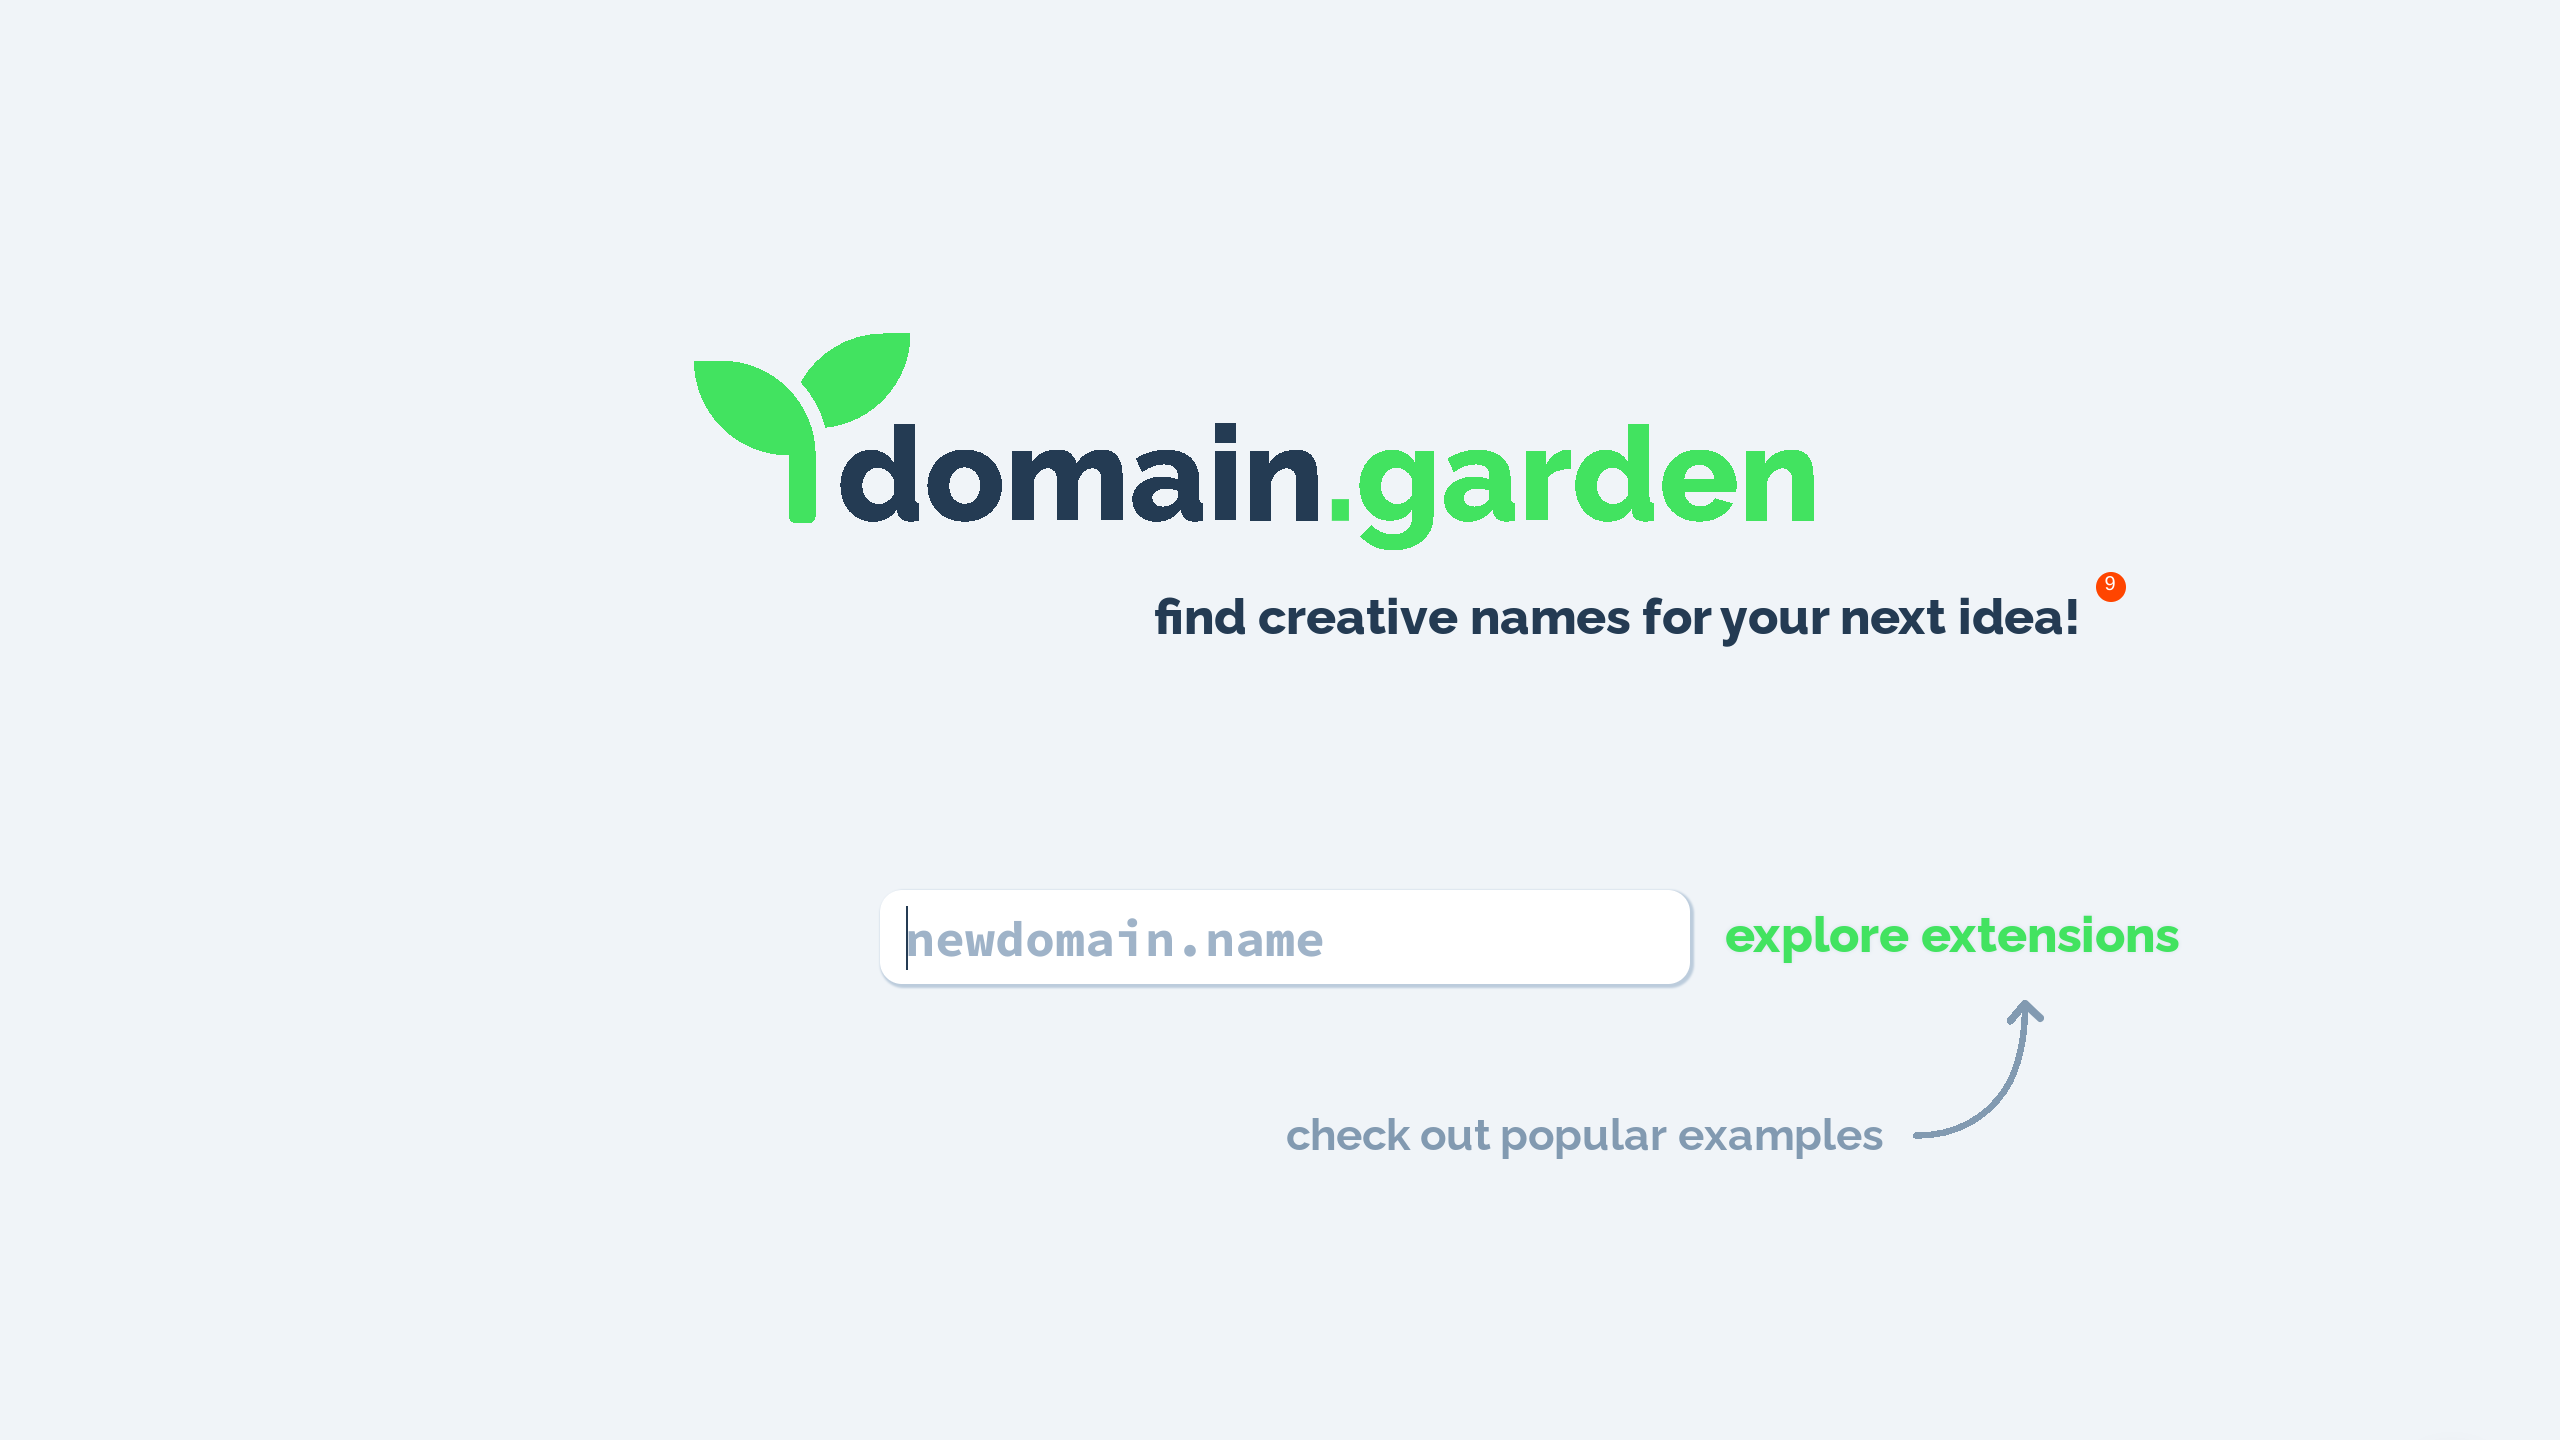 domain.garden's website screenshot